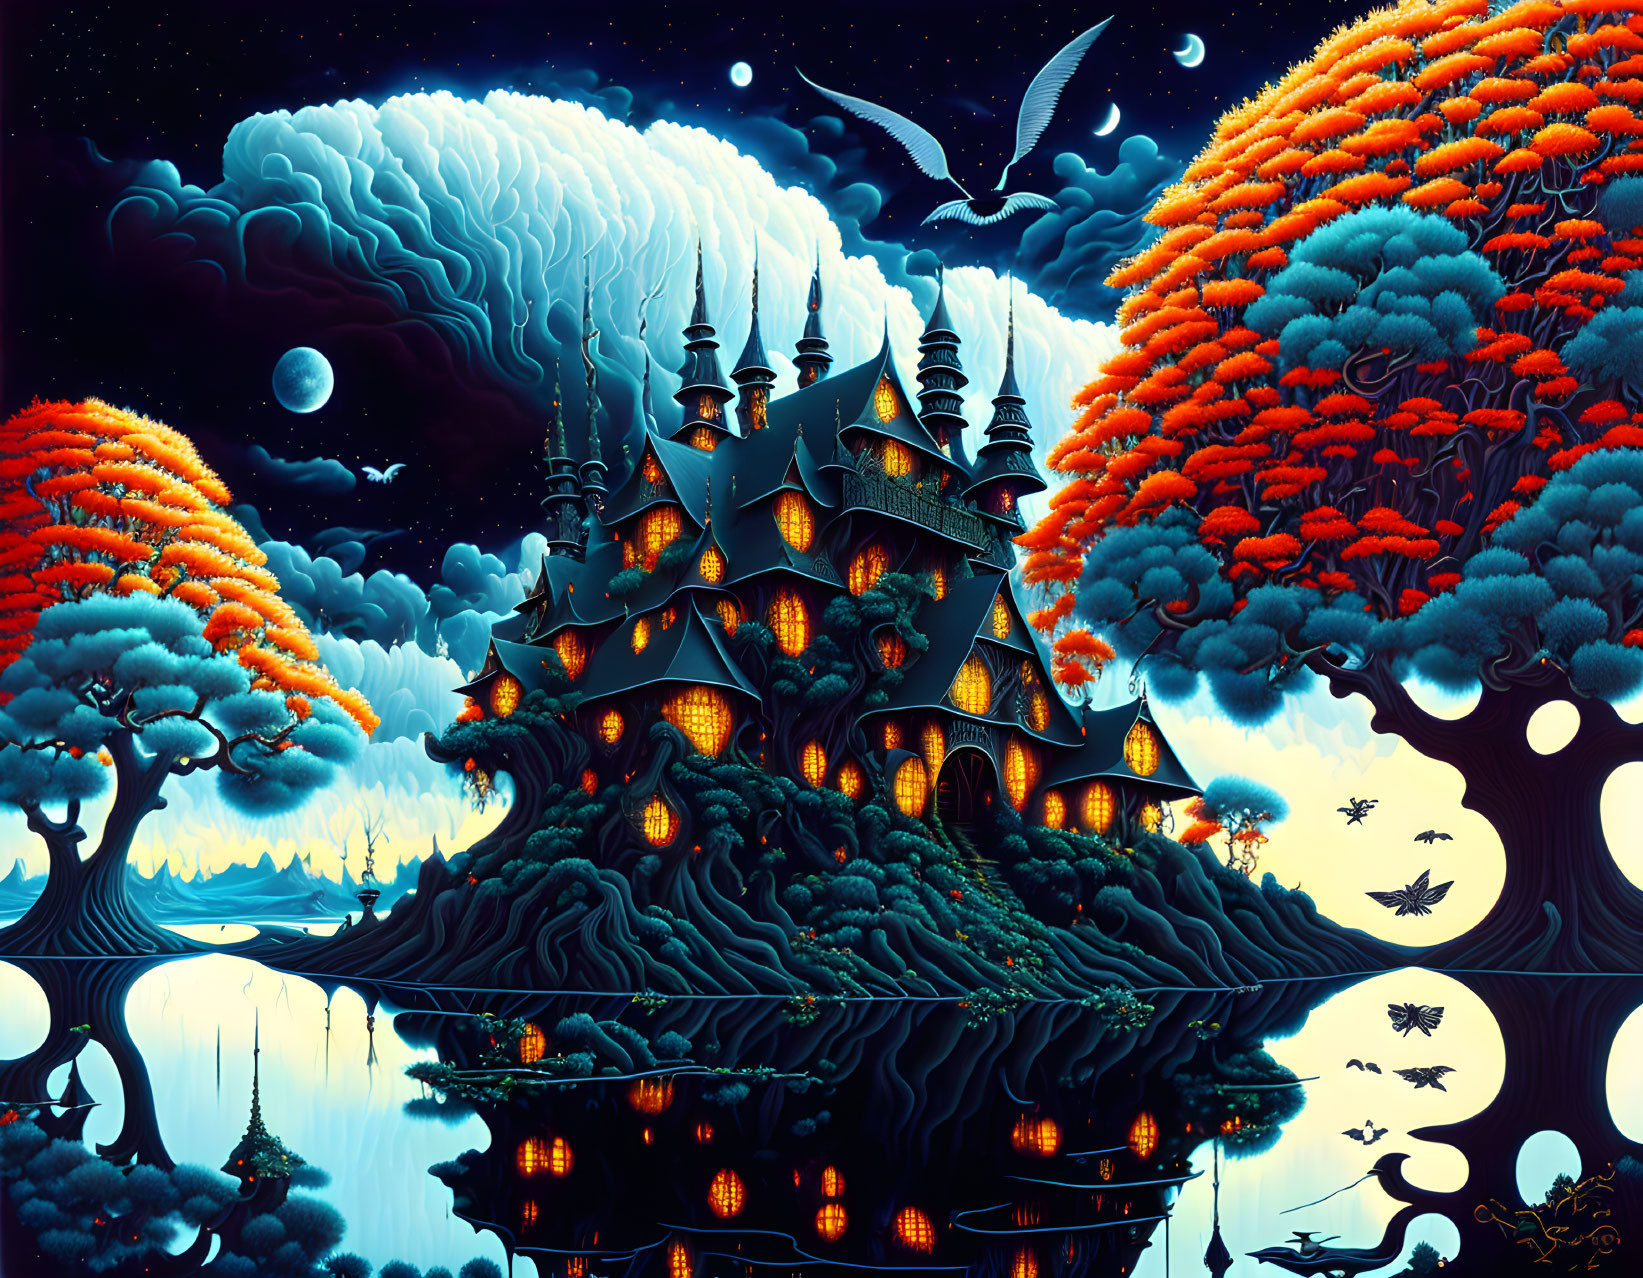 Fantastical night scene: illuminated castle, orange trees, floating islands, creatures, crescent moon